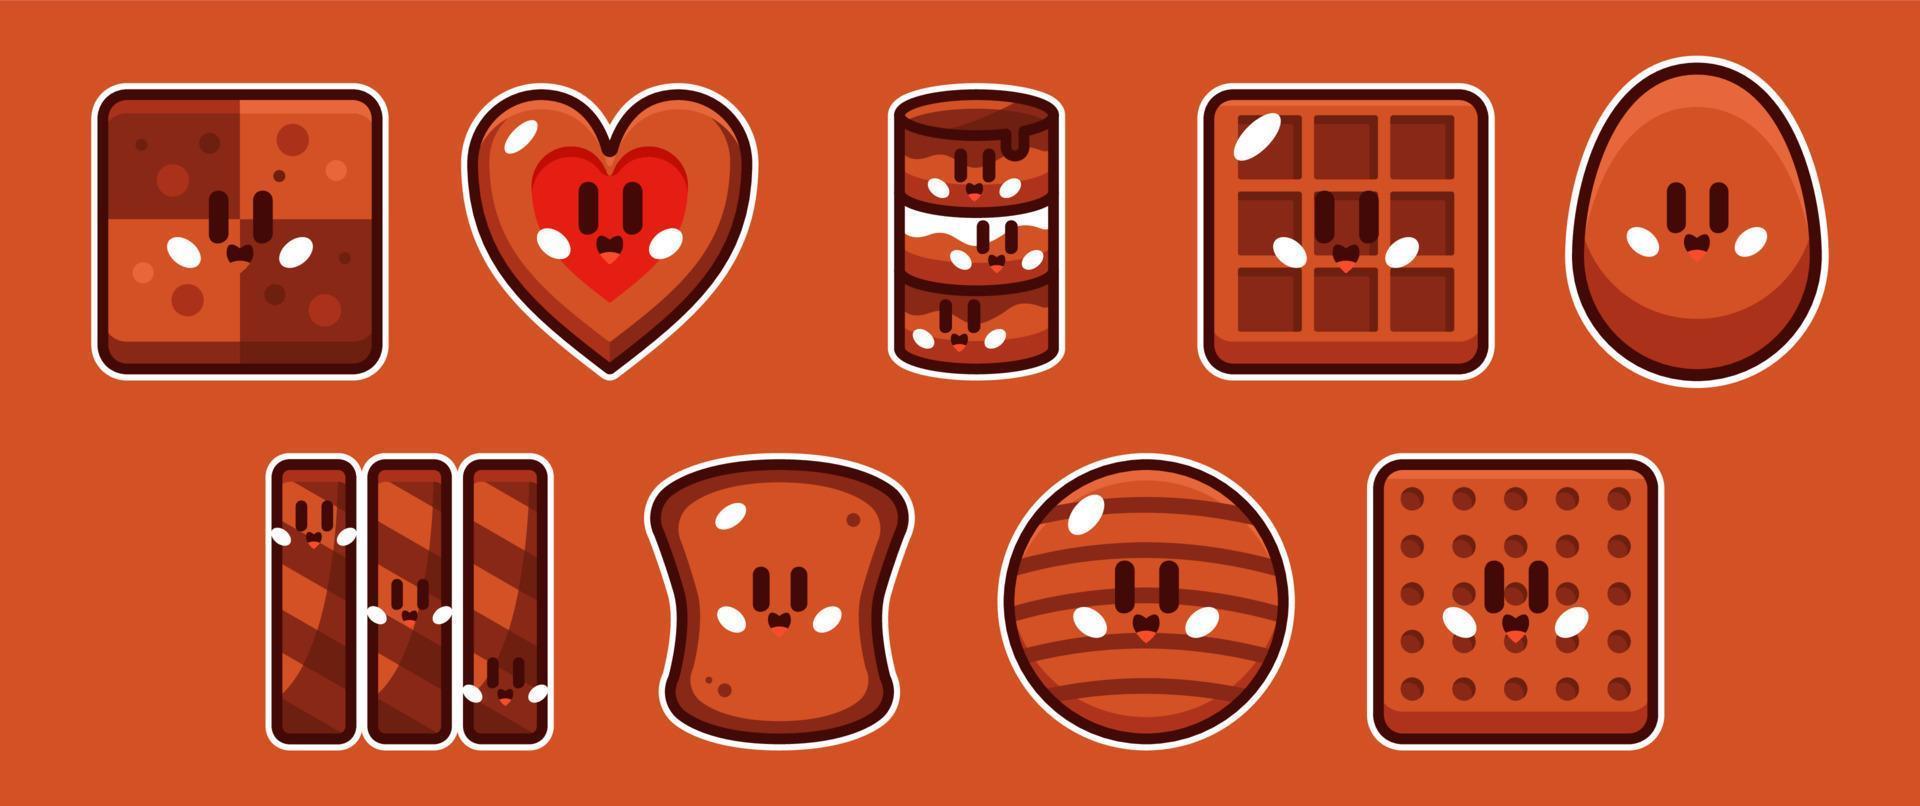 chocolate sticker pack cartoon vector illustration set